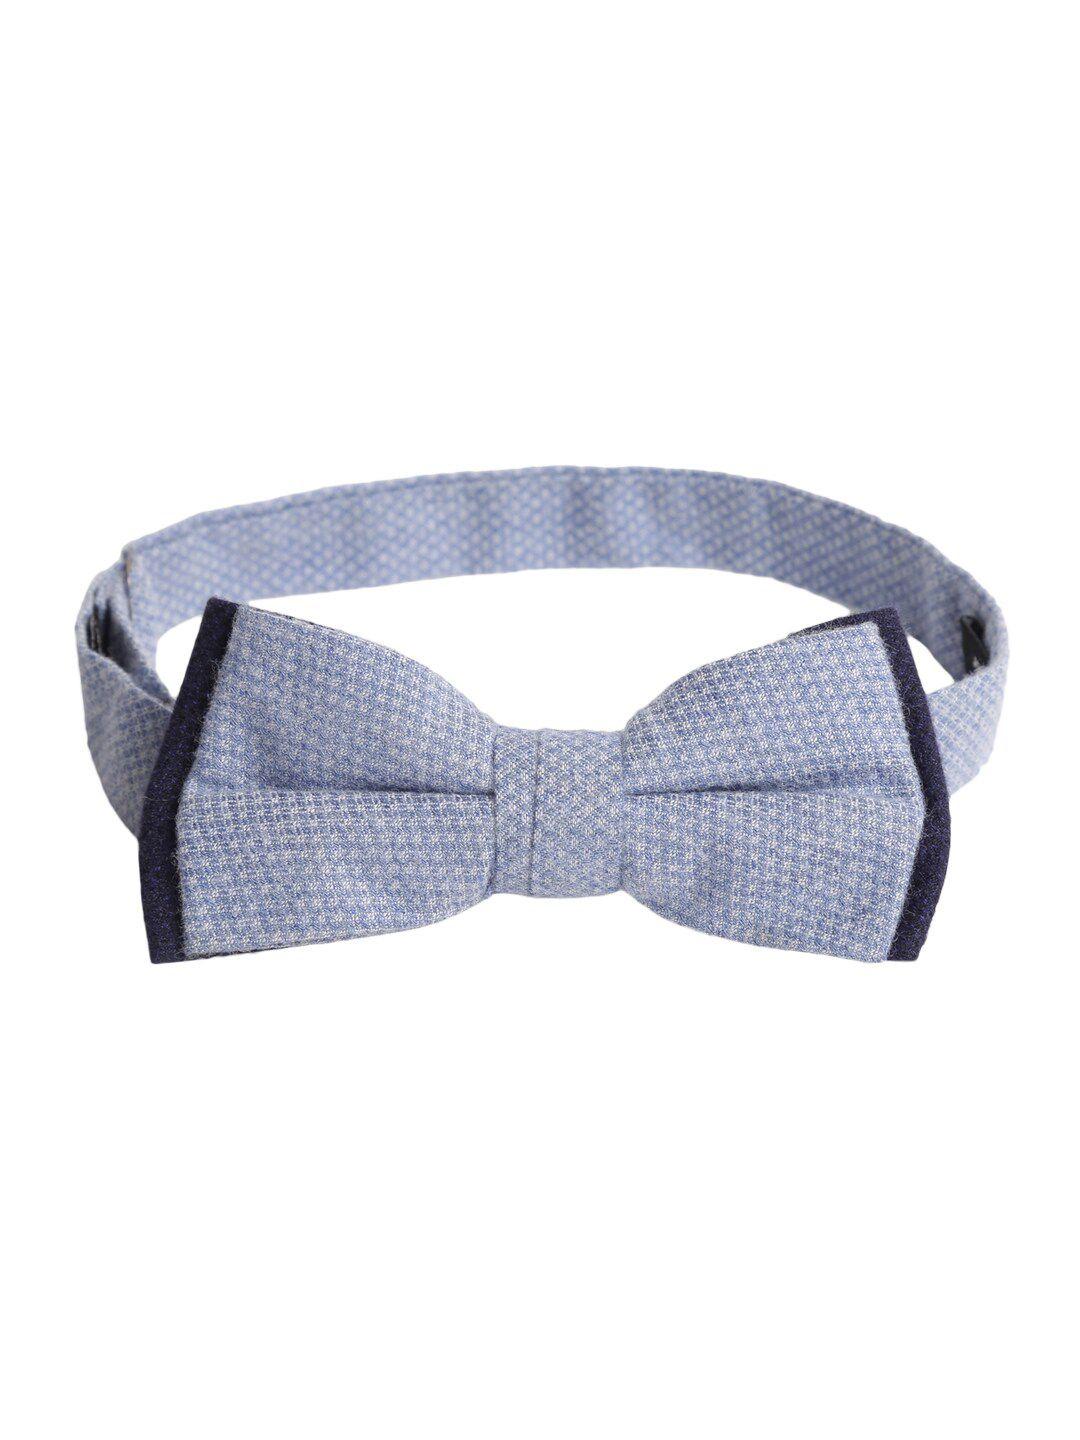 bruun & stengade blue & white woven design bow tie